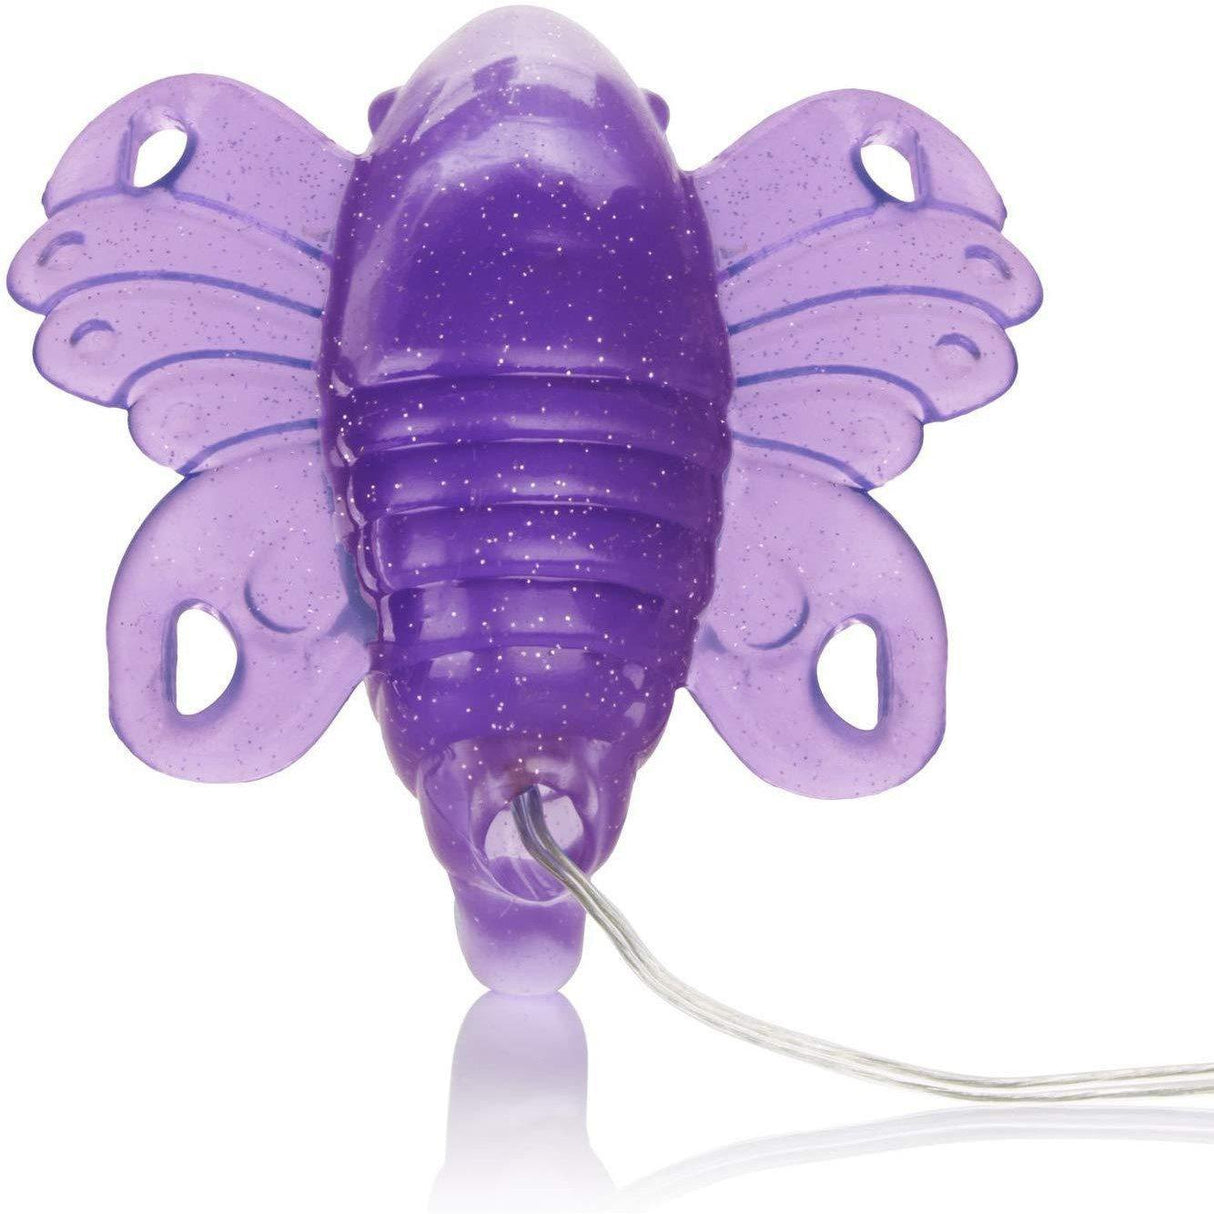 Venus Butterfly 2 Wearable Strap On Clit Vibrator - Purple